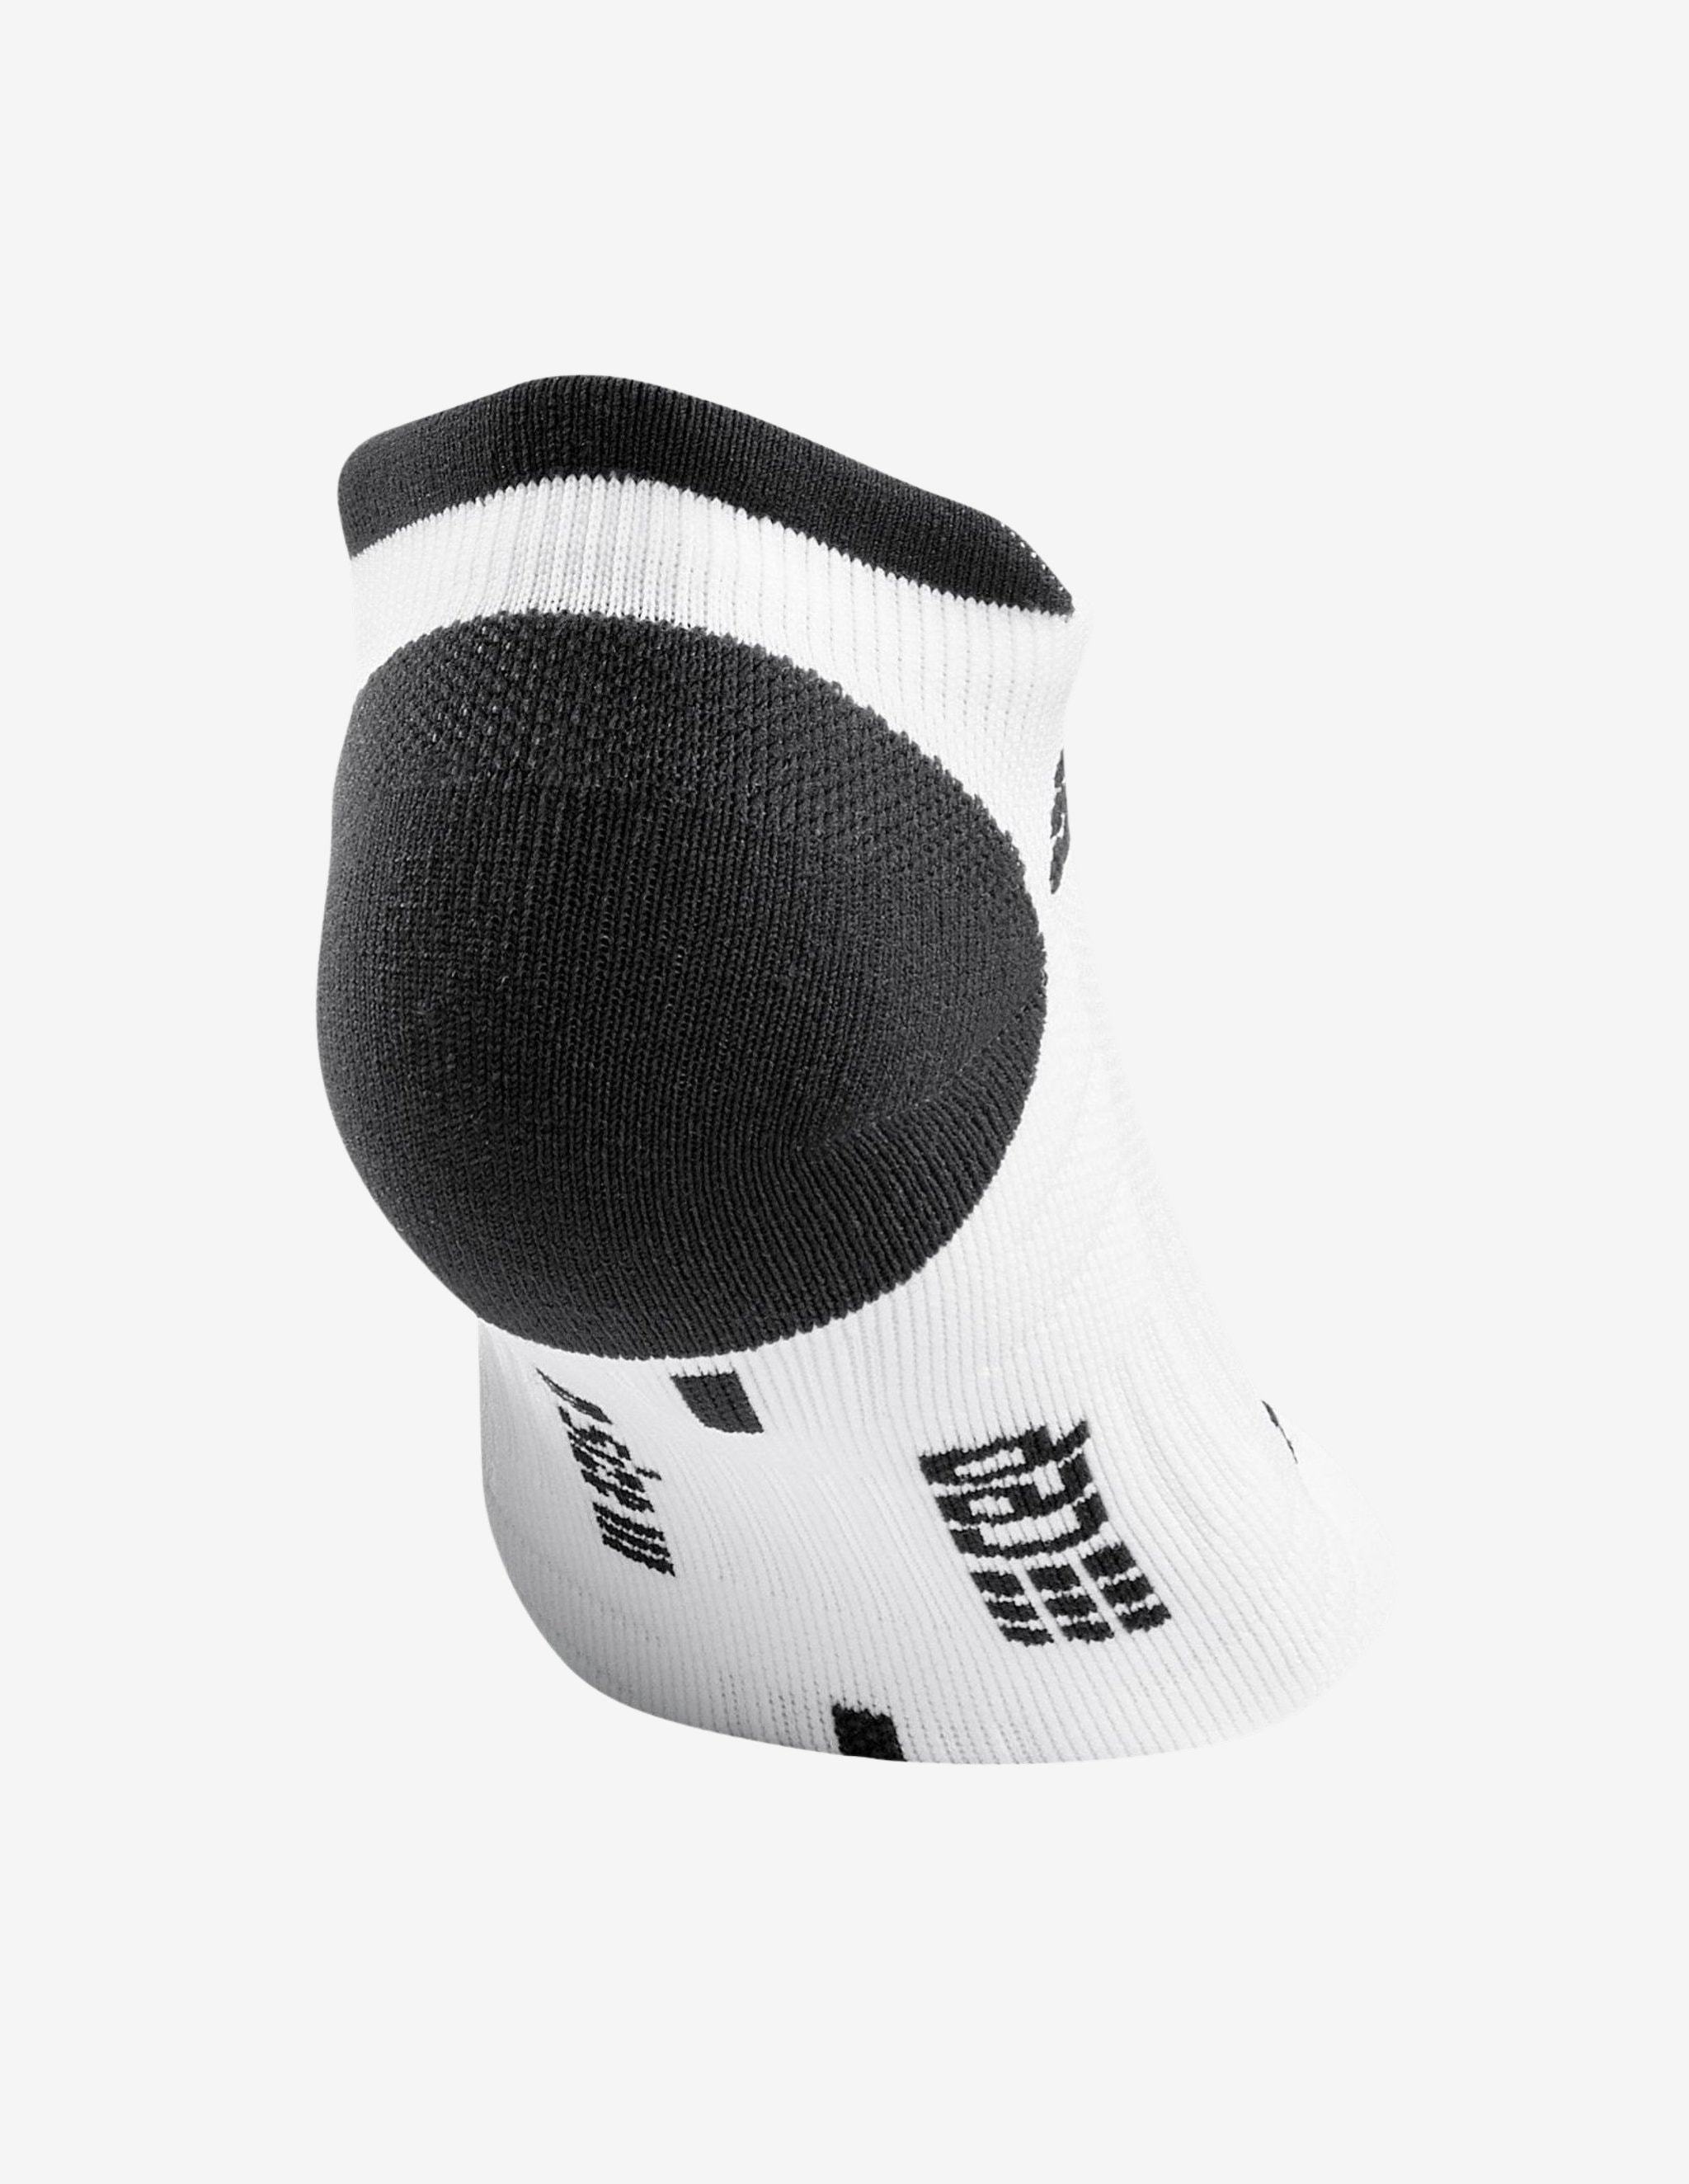 CEP No Show Socks 3.0 White/Grey-Socks-CEP Compression-Guru Muscle